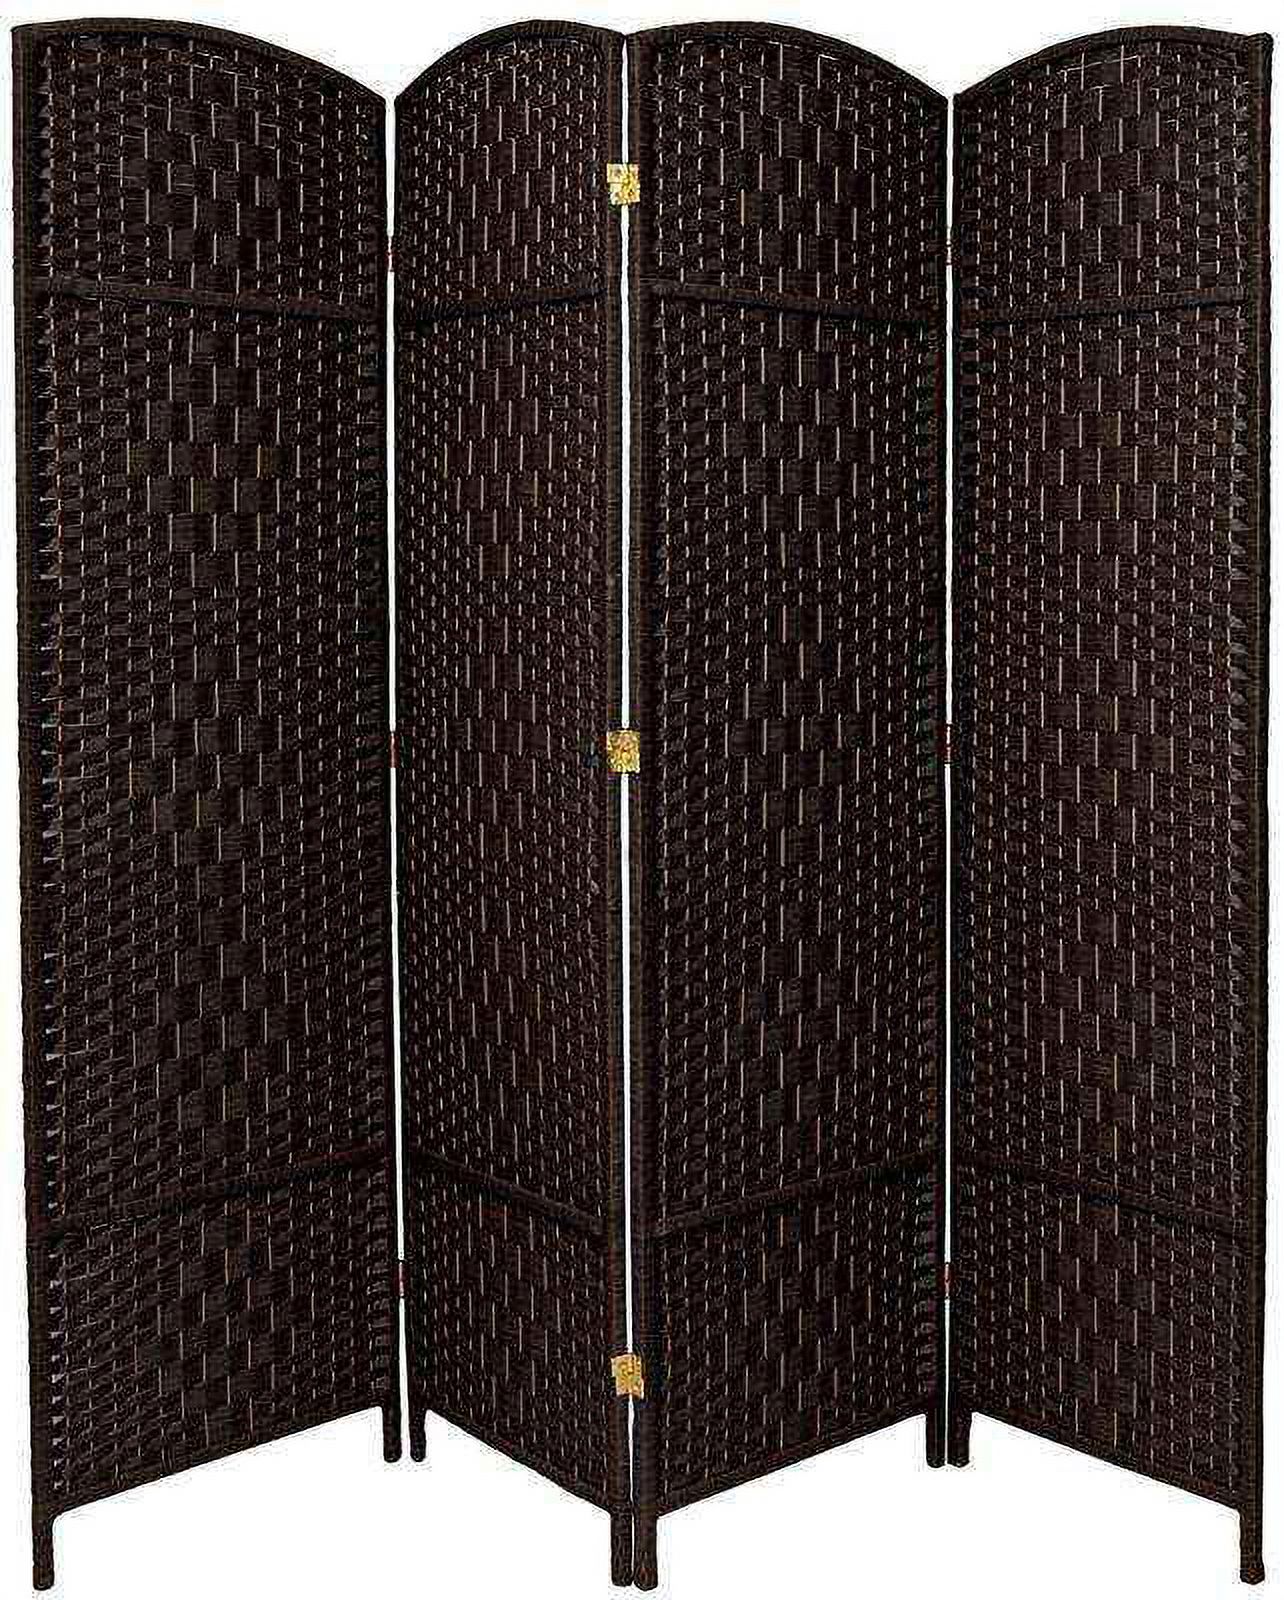 Oriental Furniture 6 ft. Tall Diamond Weave Room Divider - Black - 4 Panel - image 2 of 2